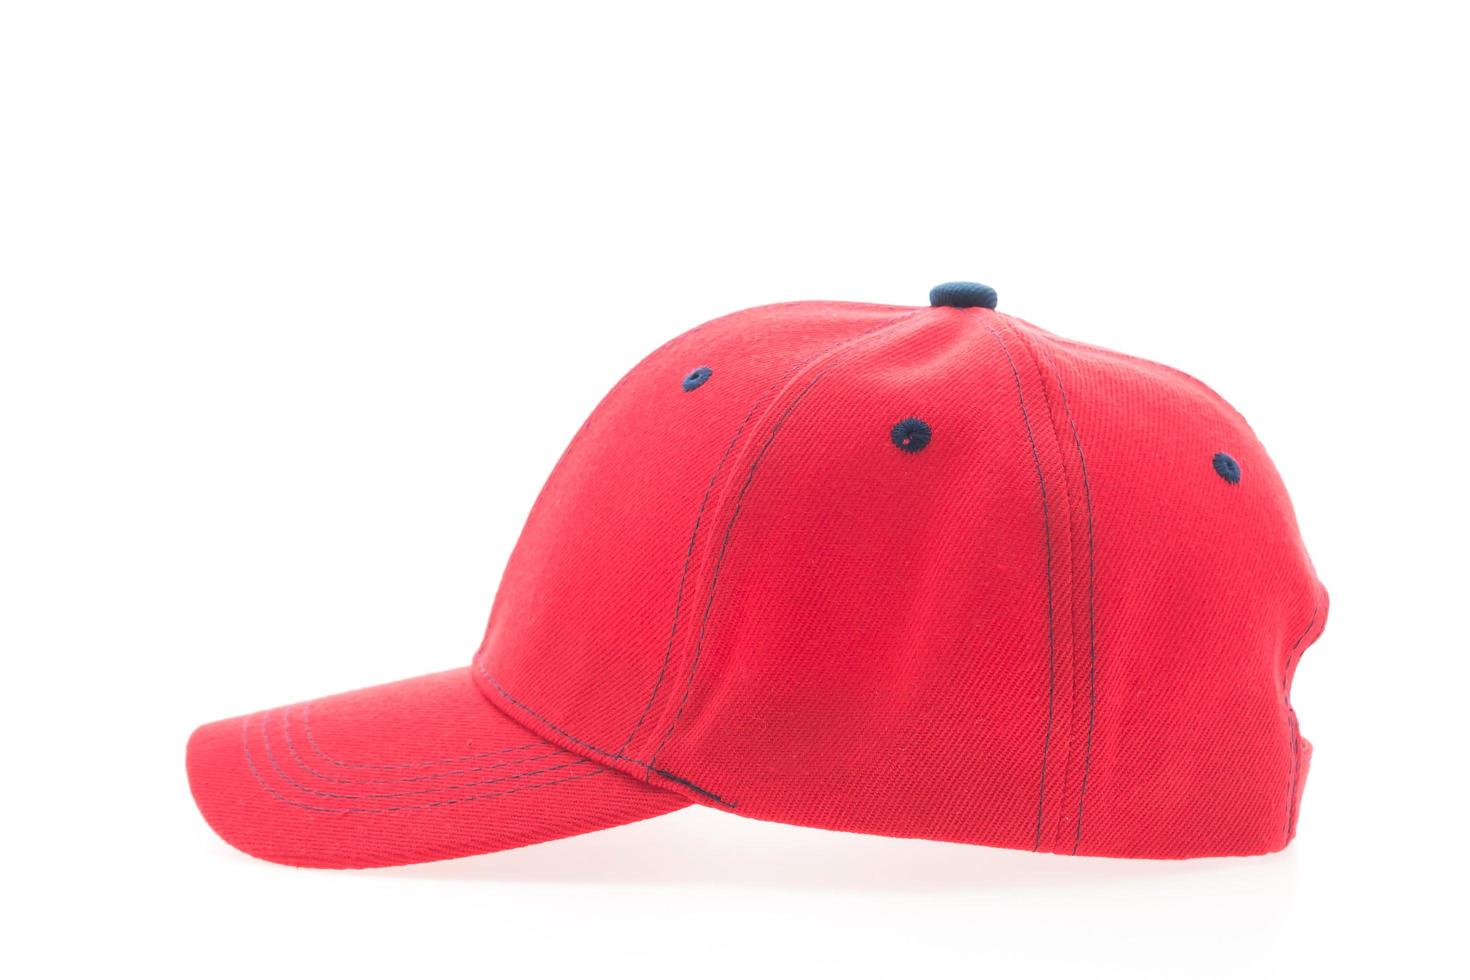 Red baseball cap photo